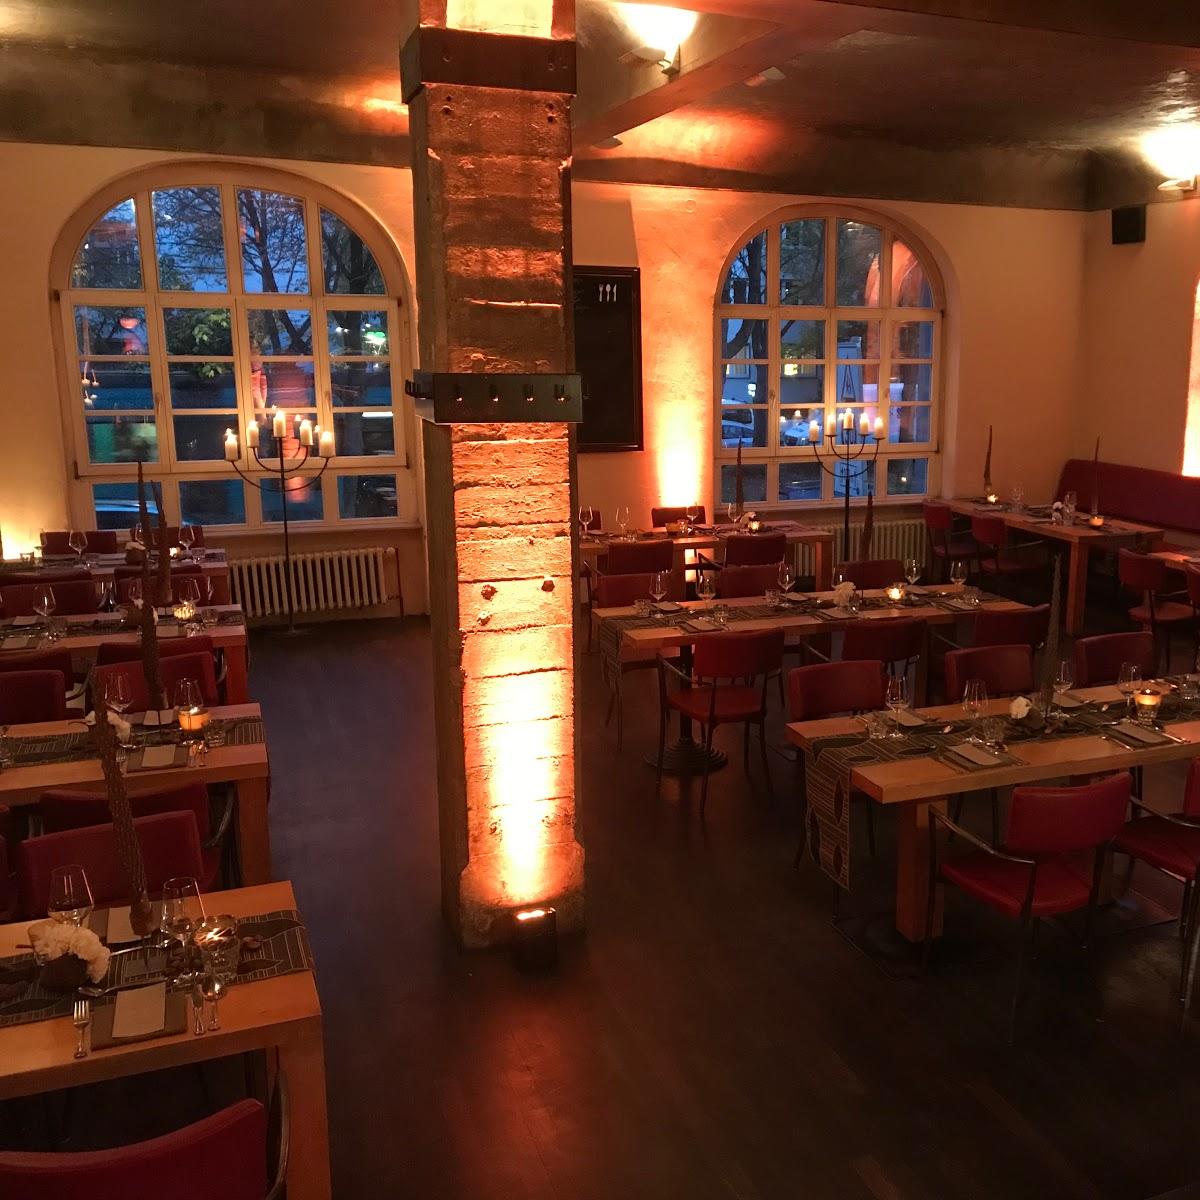 Restaurant "Orfeos Erben - Kino, Restaurant, Bar, Events" in Frankfurt am Main